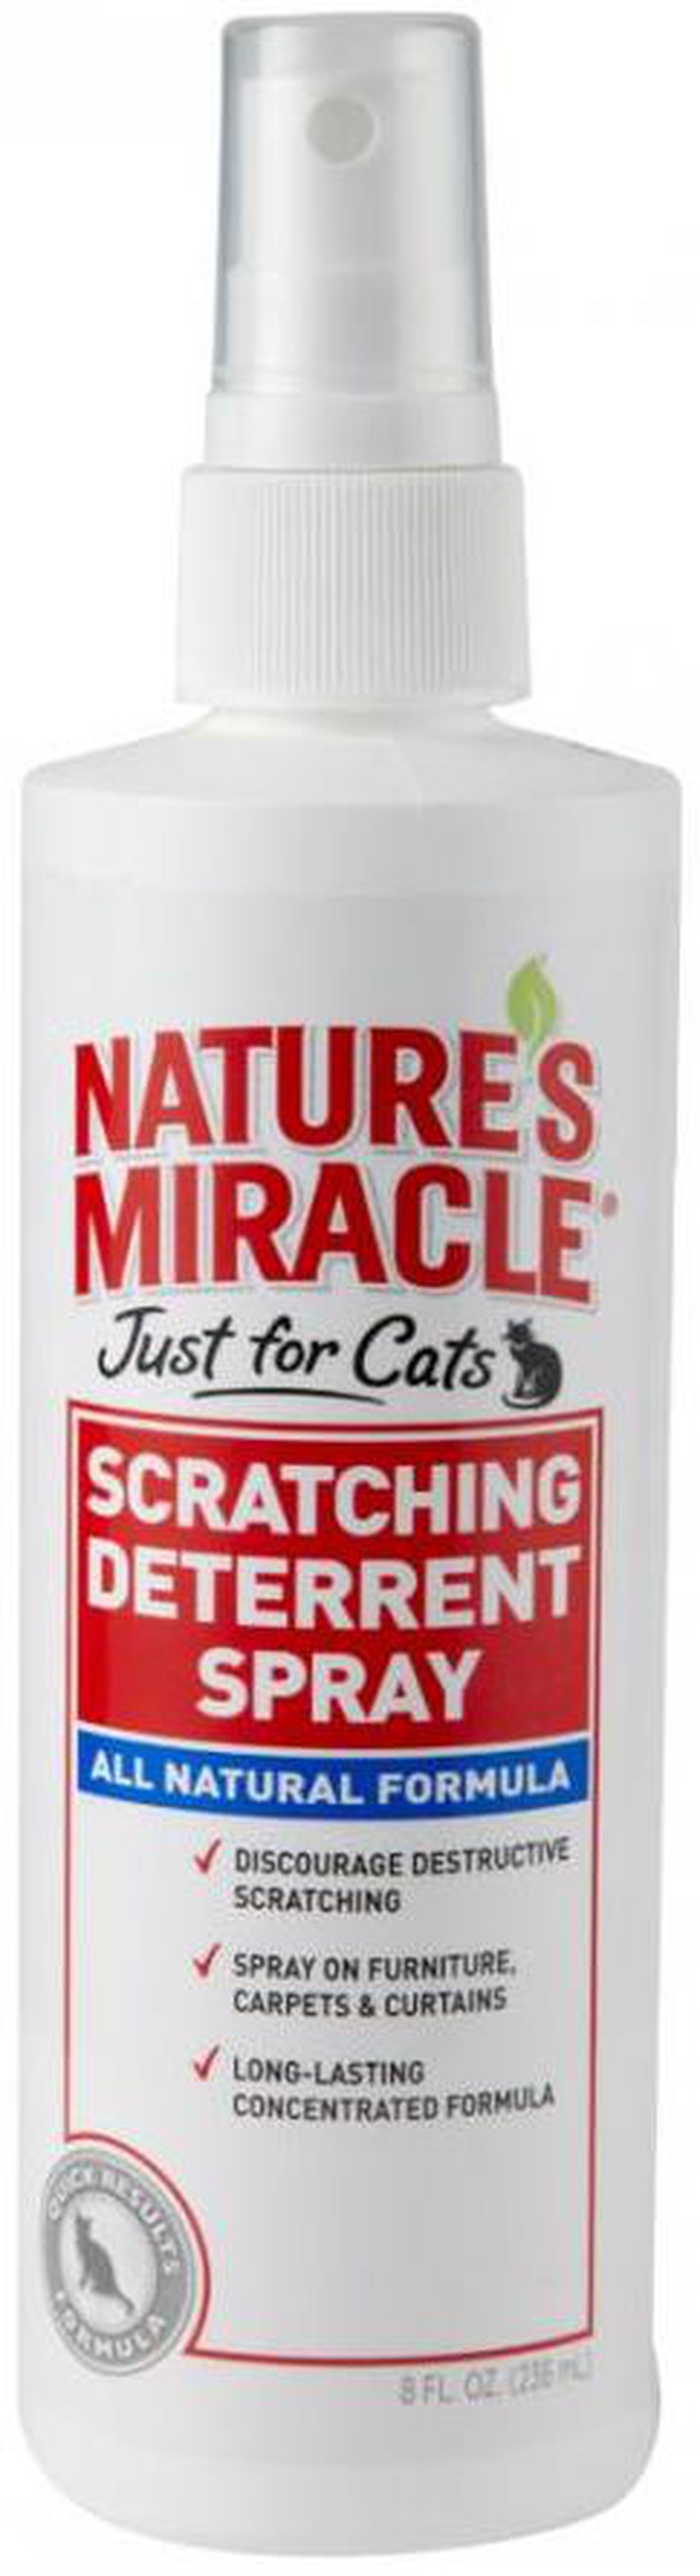 Средство против царапанья кошками Nature's Miracle Scratching Deterrent Spray спрей 236 мл фото